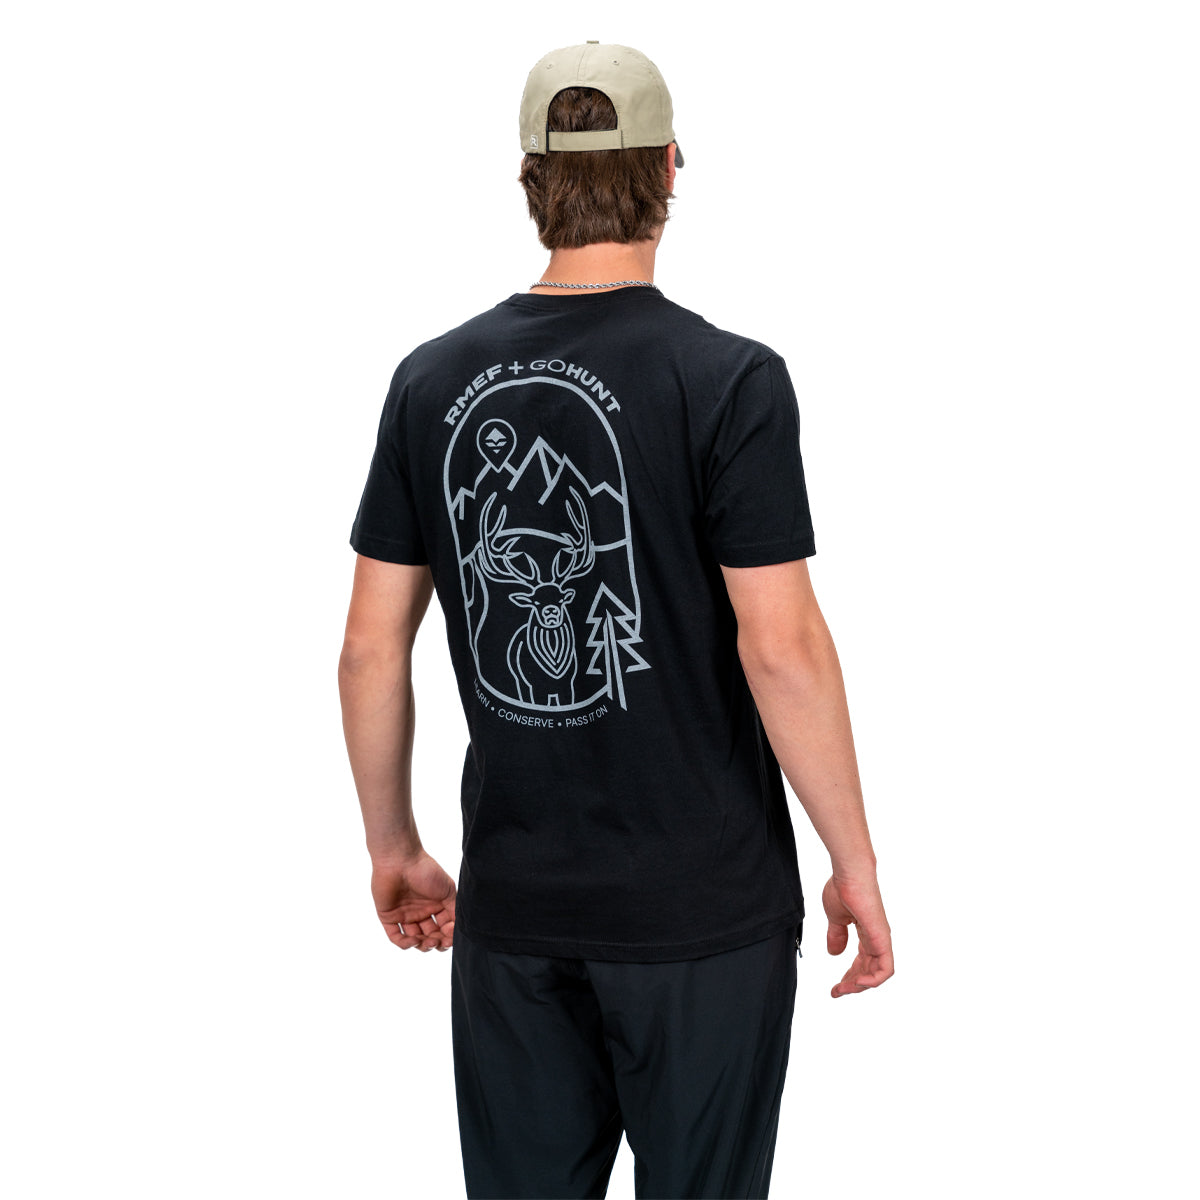 GOHUNT RMEF Bull T-shirt in Black by GOHUNT | GOHUNT - GOHUNT Shop